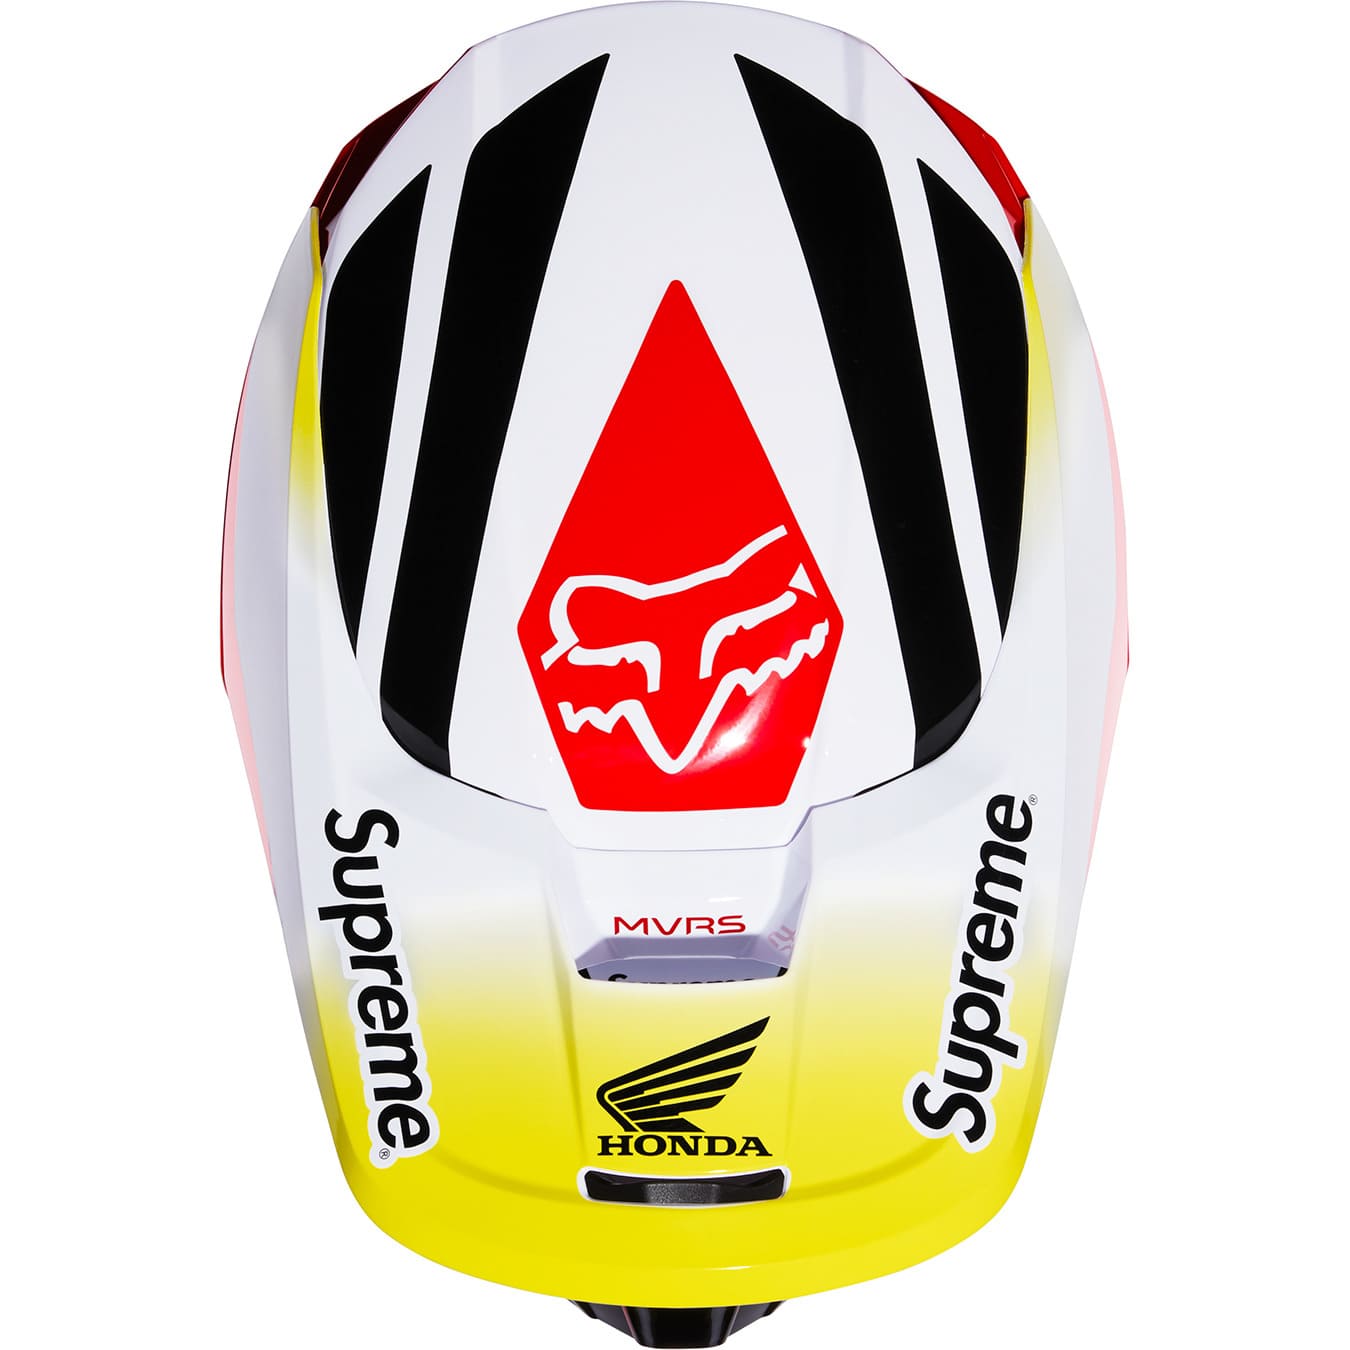 Supreme®/Honda®/Fox® Racing V1 Helmet